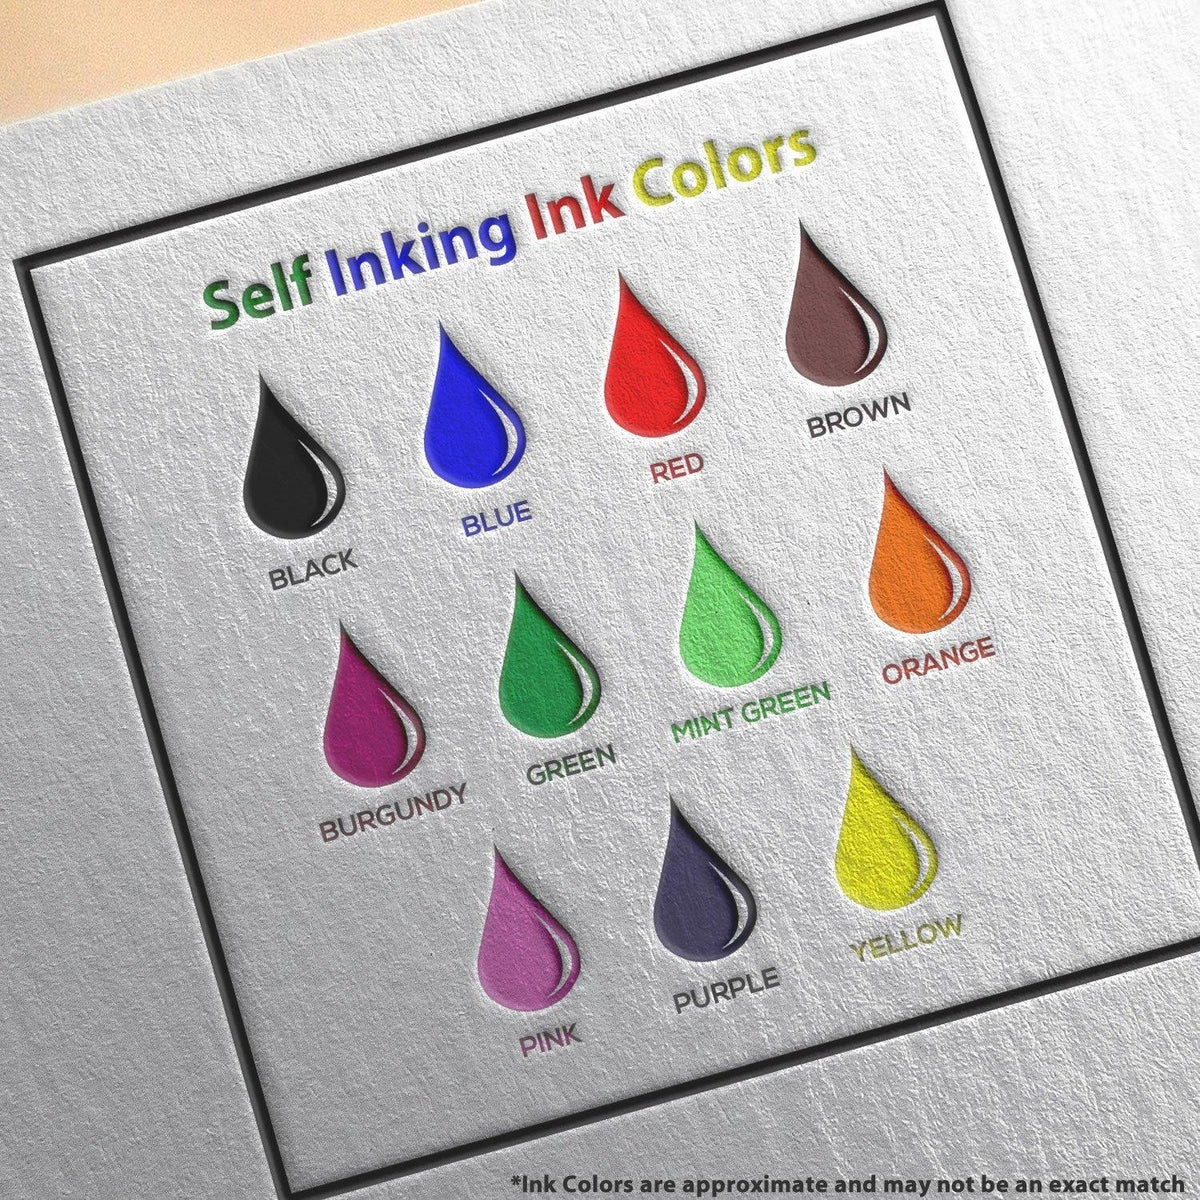 Large Self-Inking Bold Font File Stamp Ink Color Options